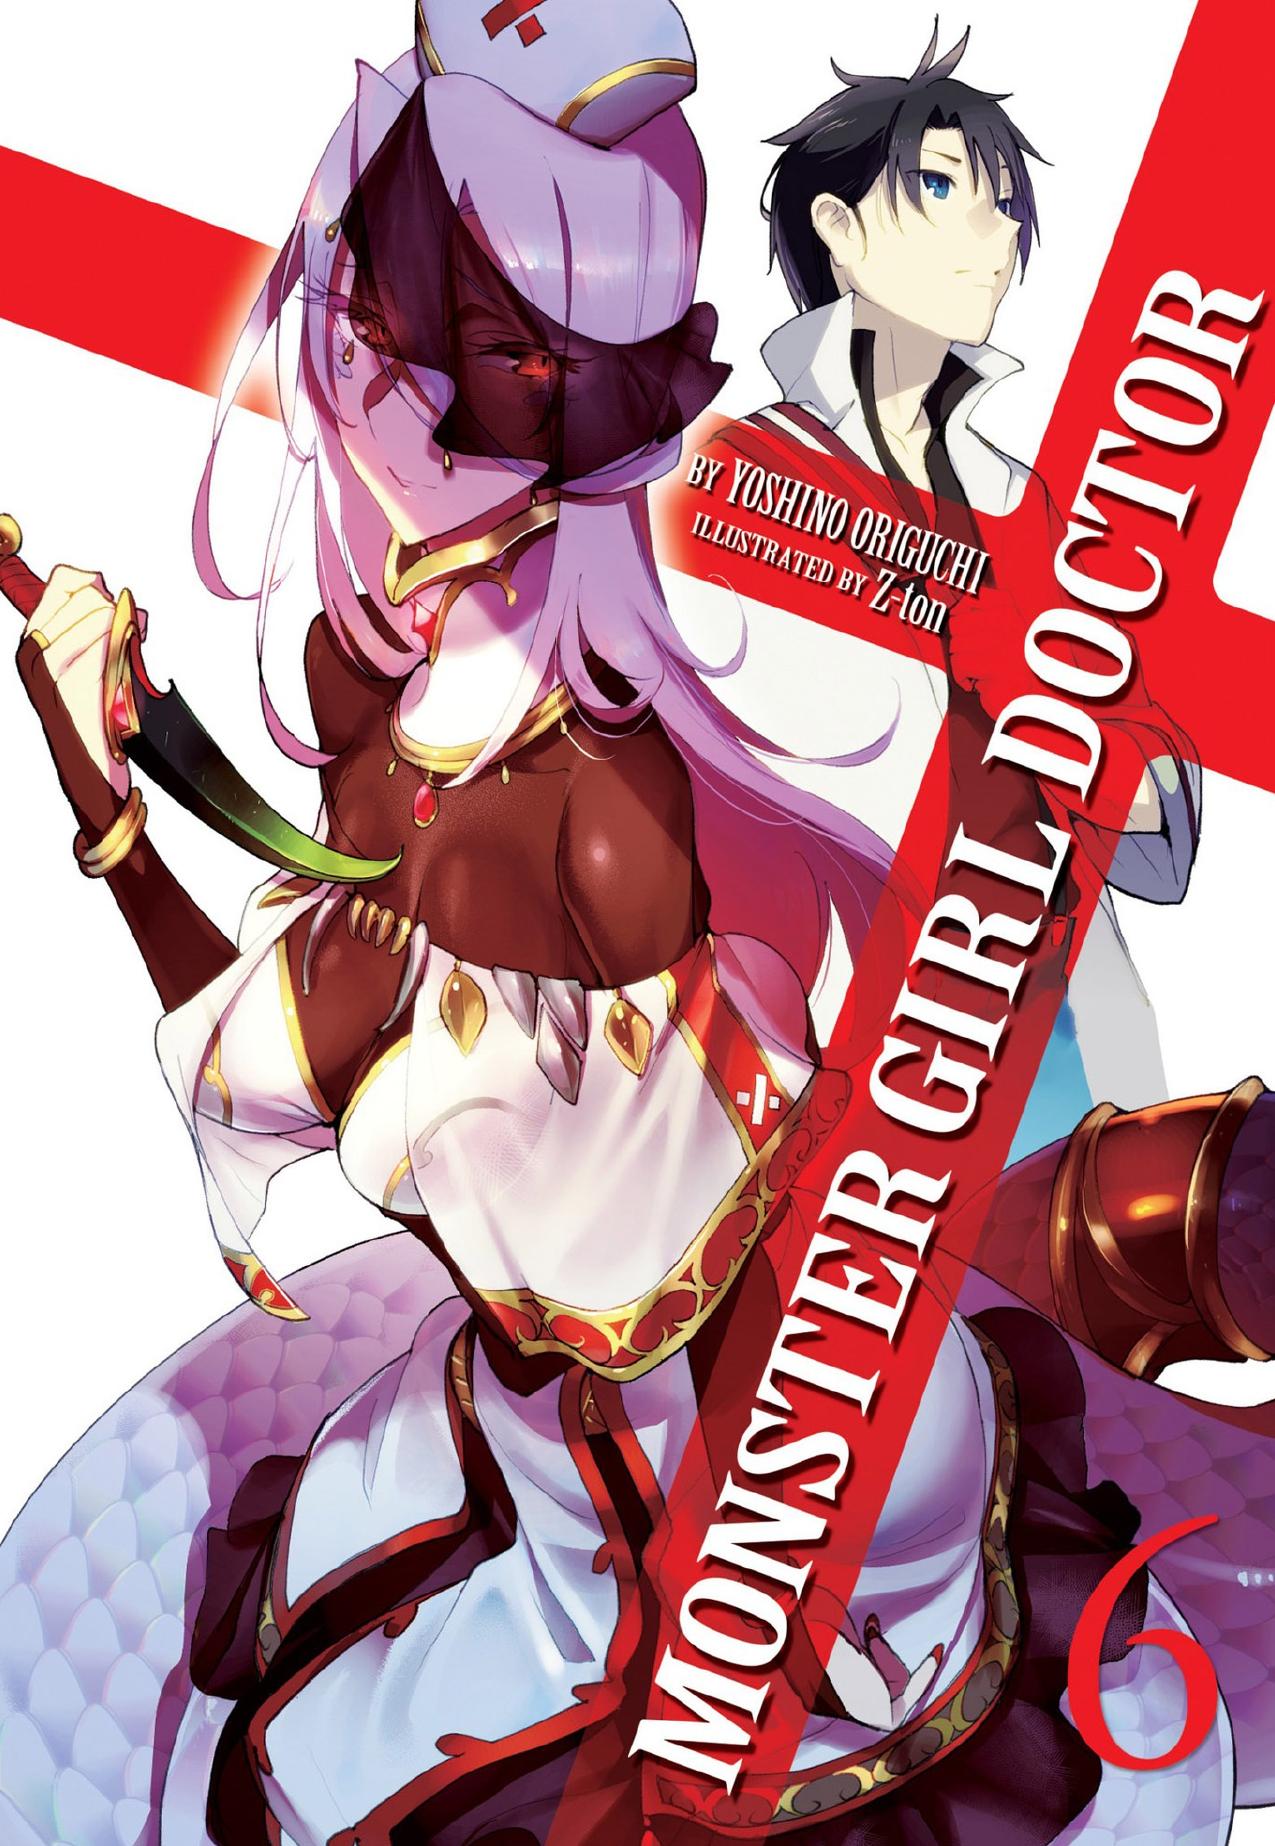 Monster Girl Doctor (Light Novel) Vol. 6 by Yoshino Origuchi